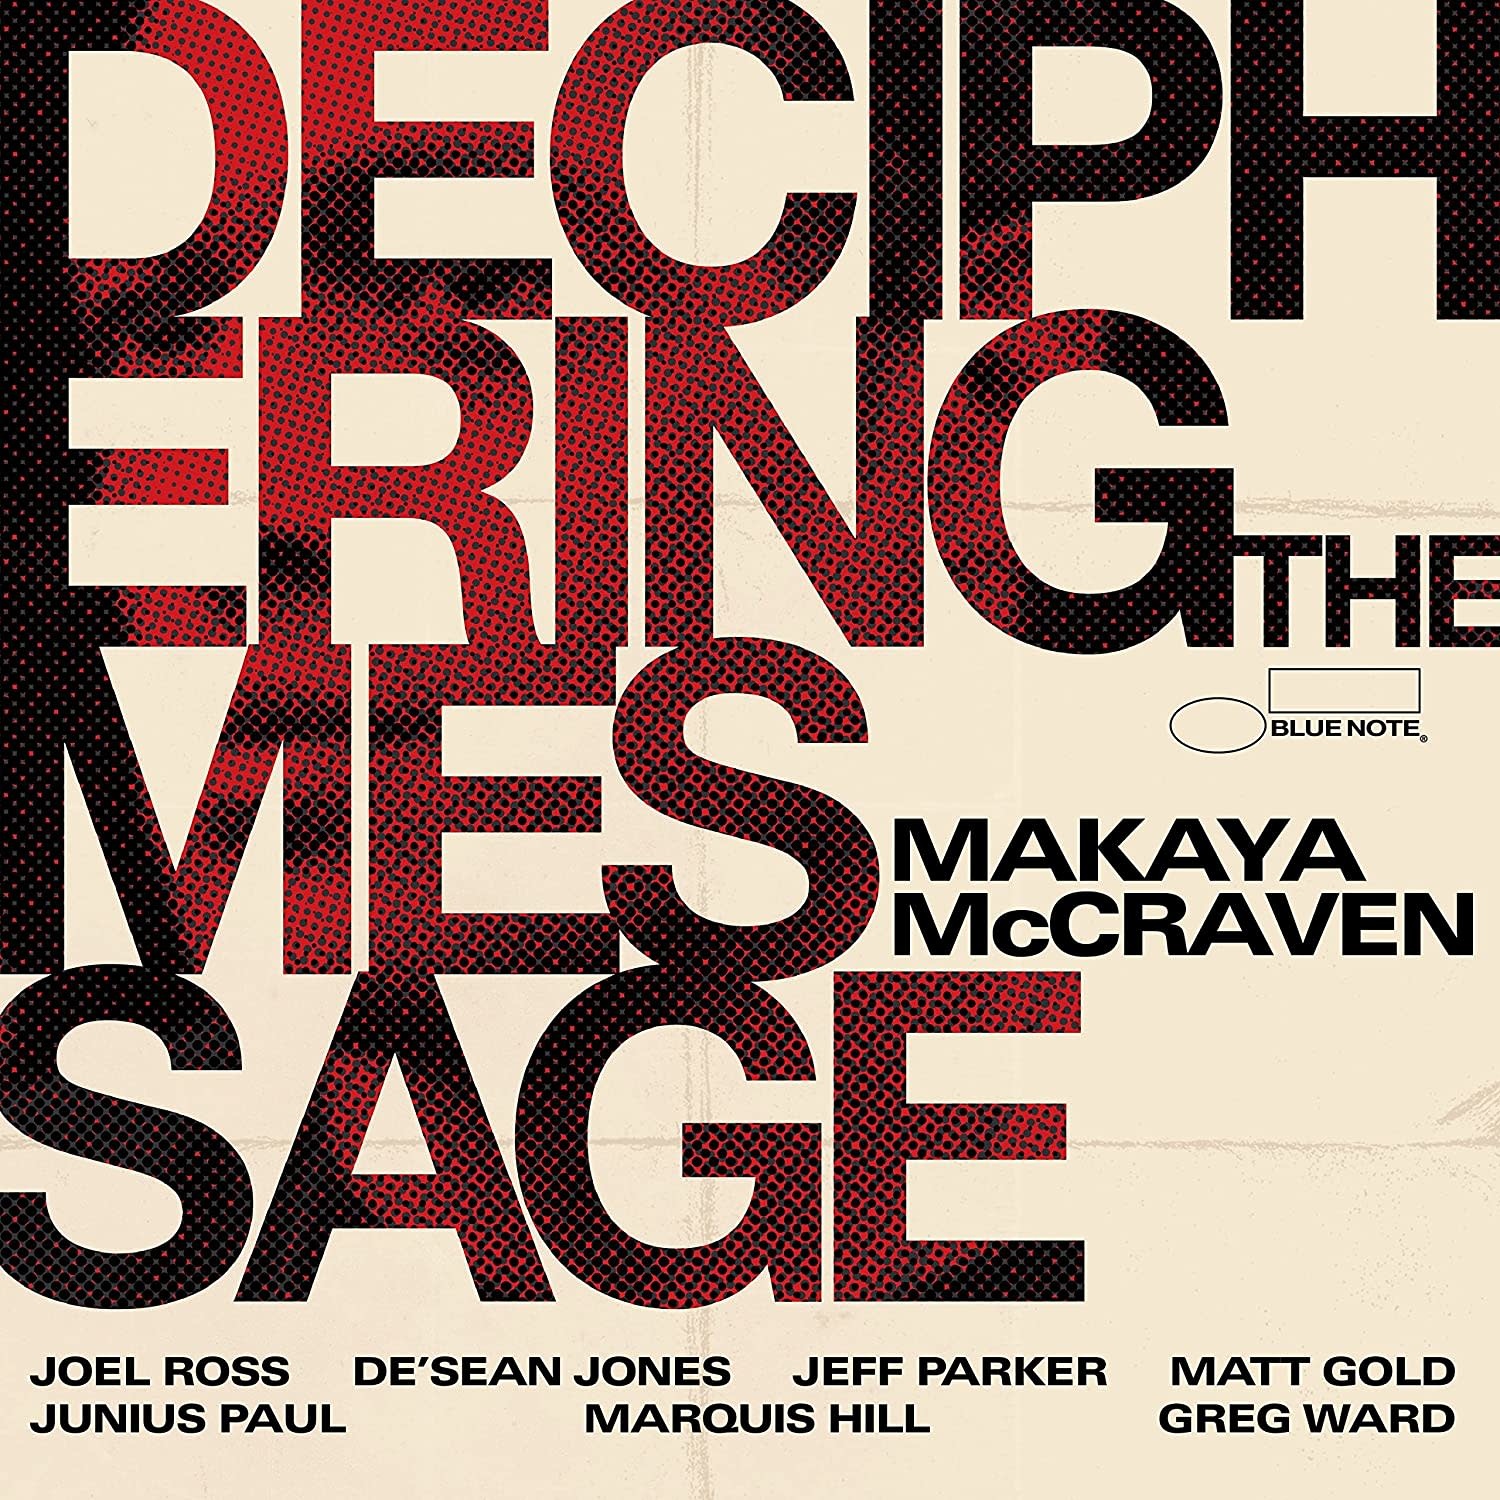 Makaya McCraven – Deciphering The Message